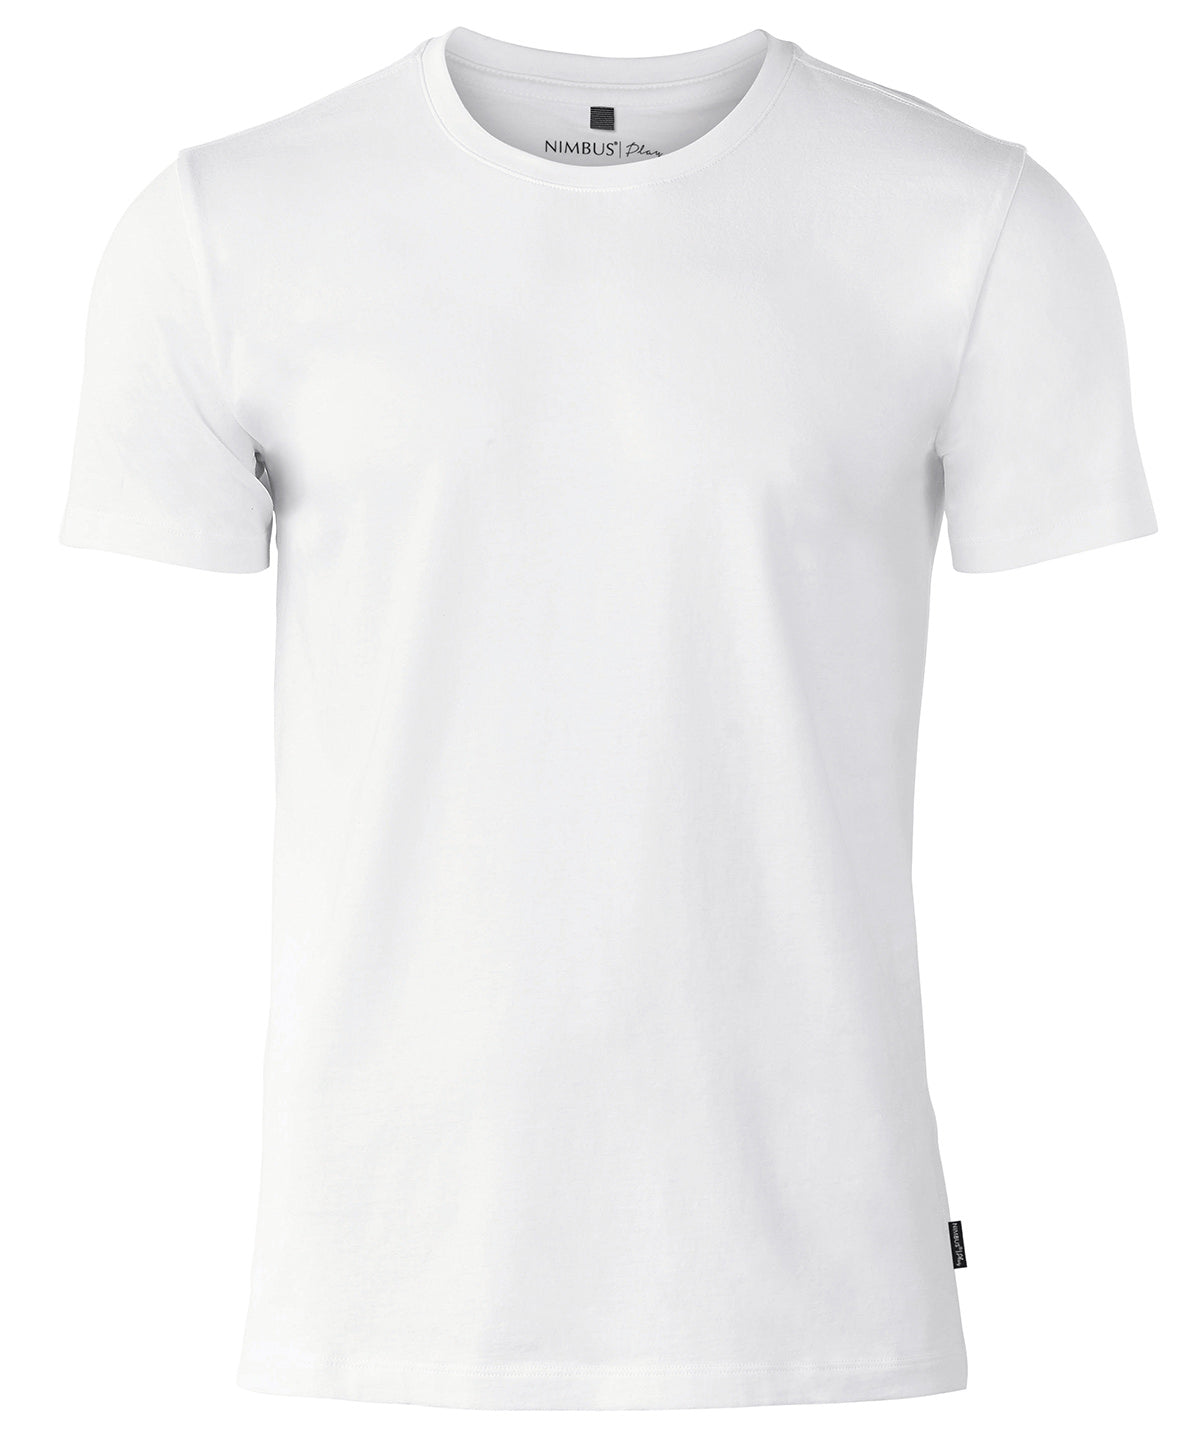 Orlando – soft round neck t-shirt